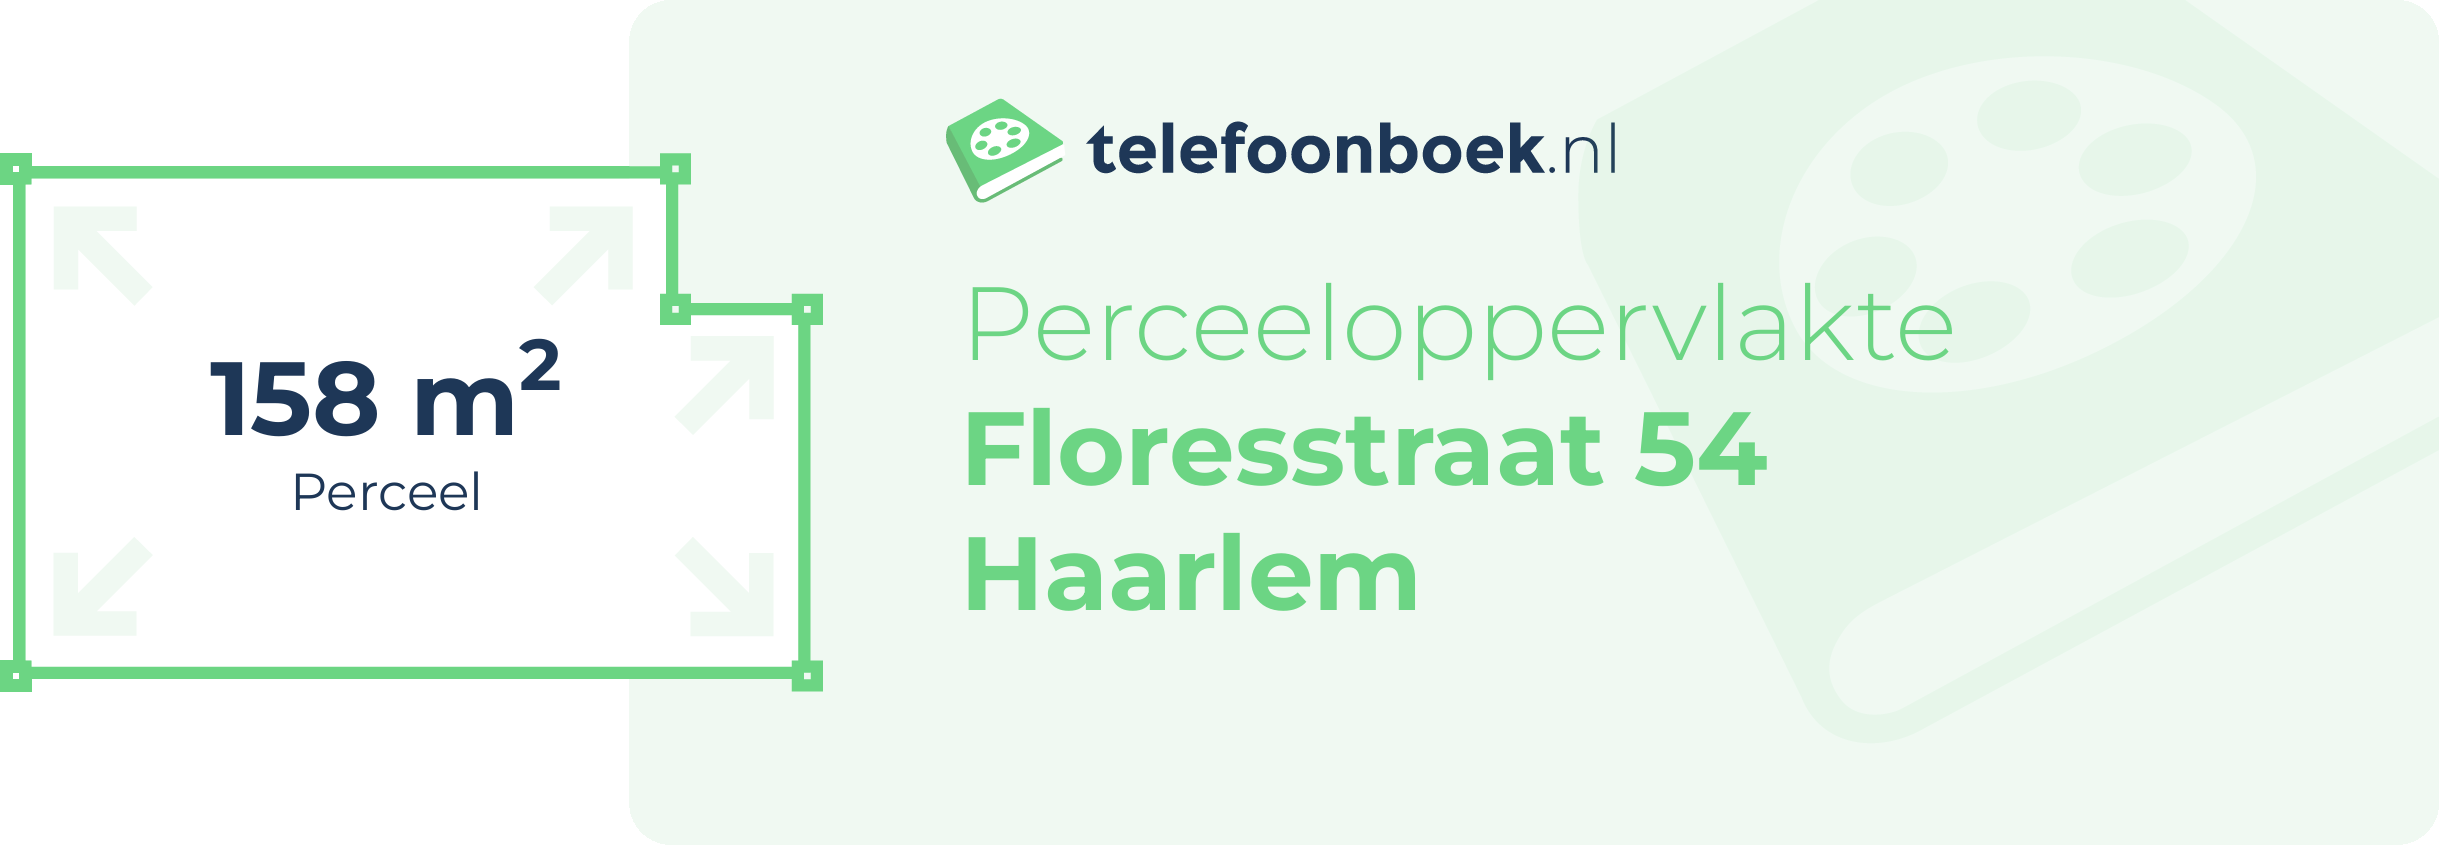 Perceeloppervlakte Floresstraat 54 Haarlem